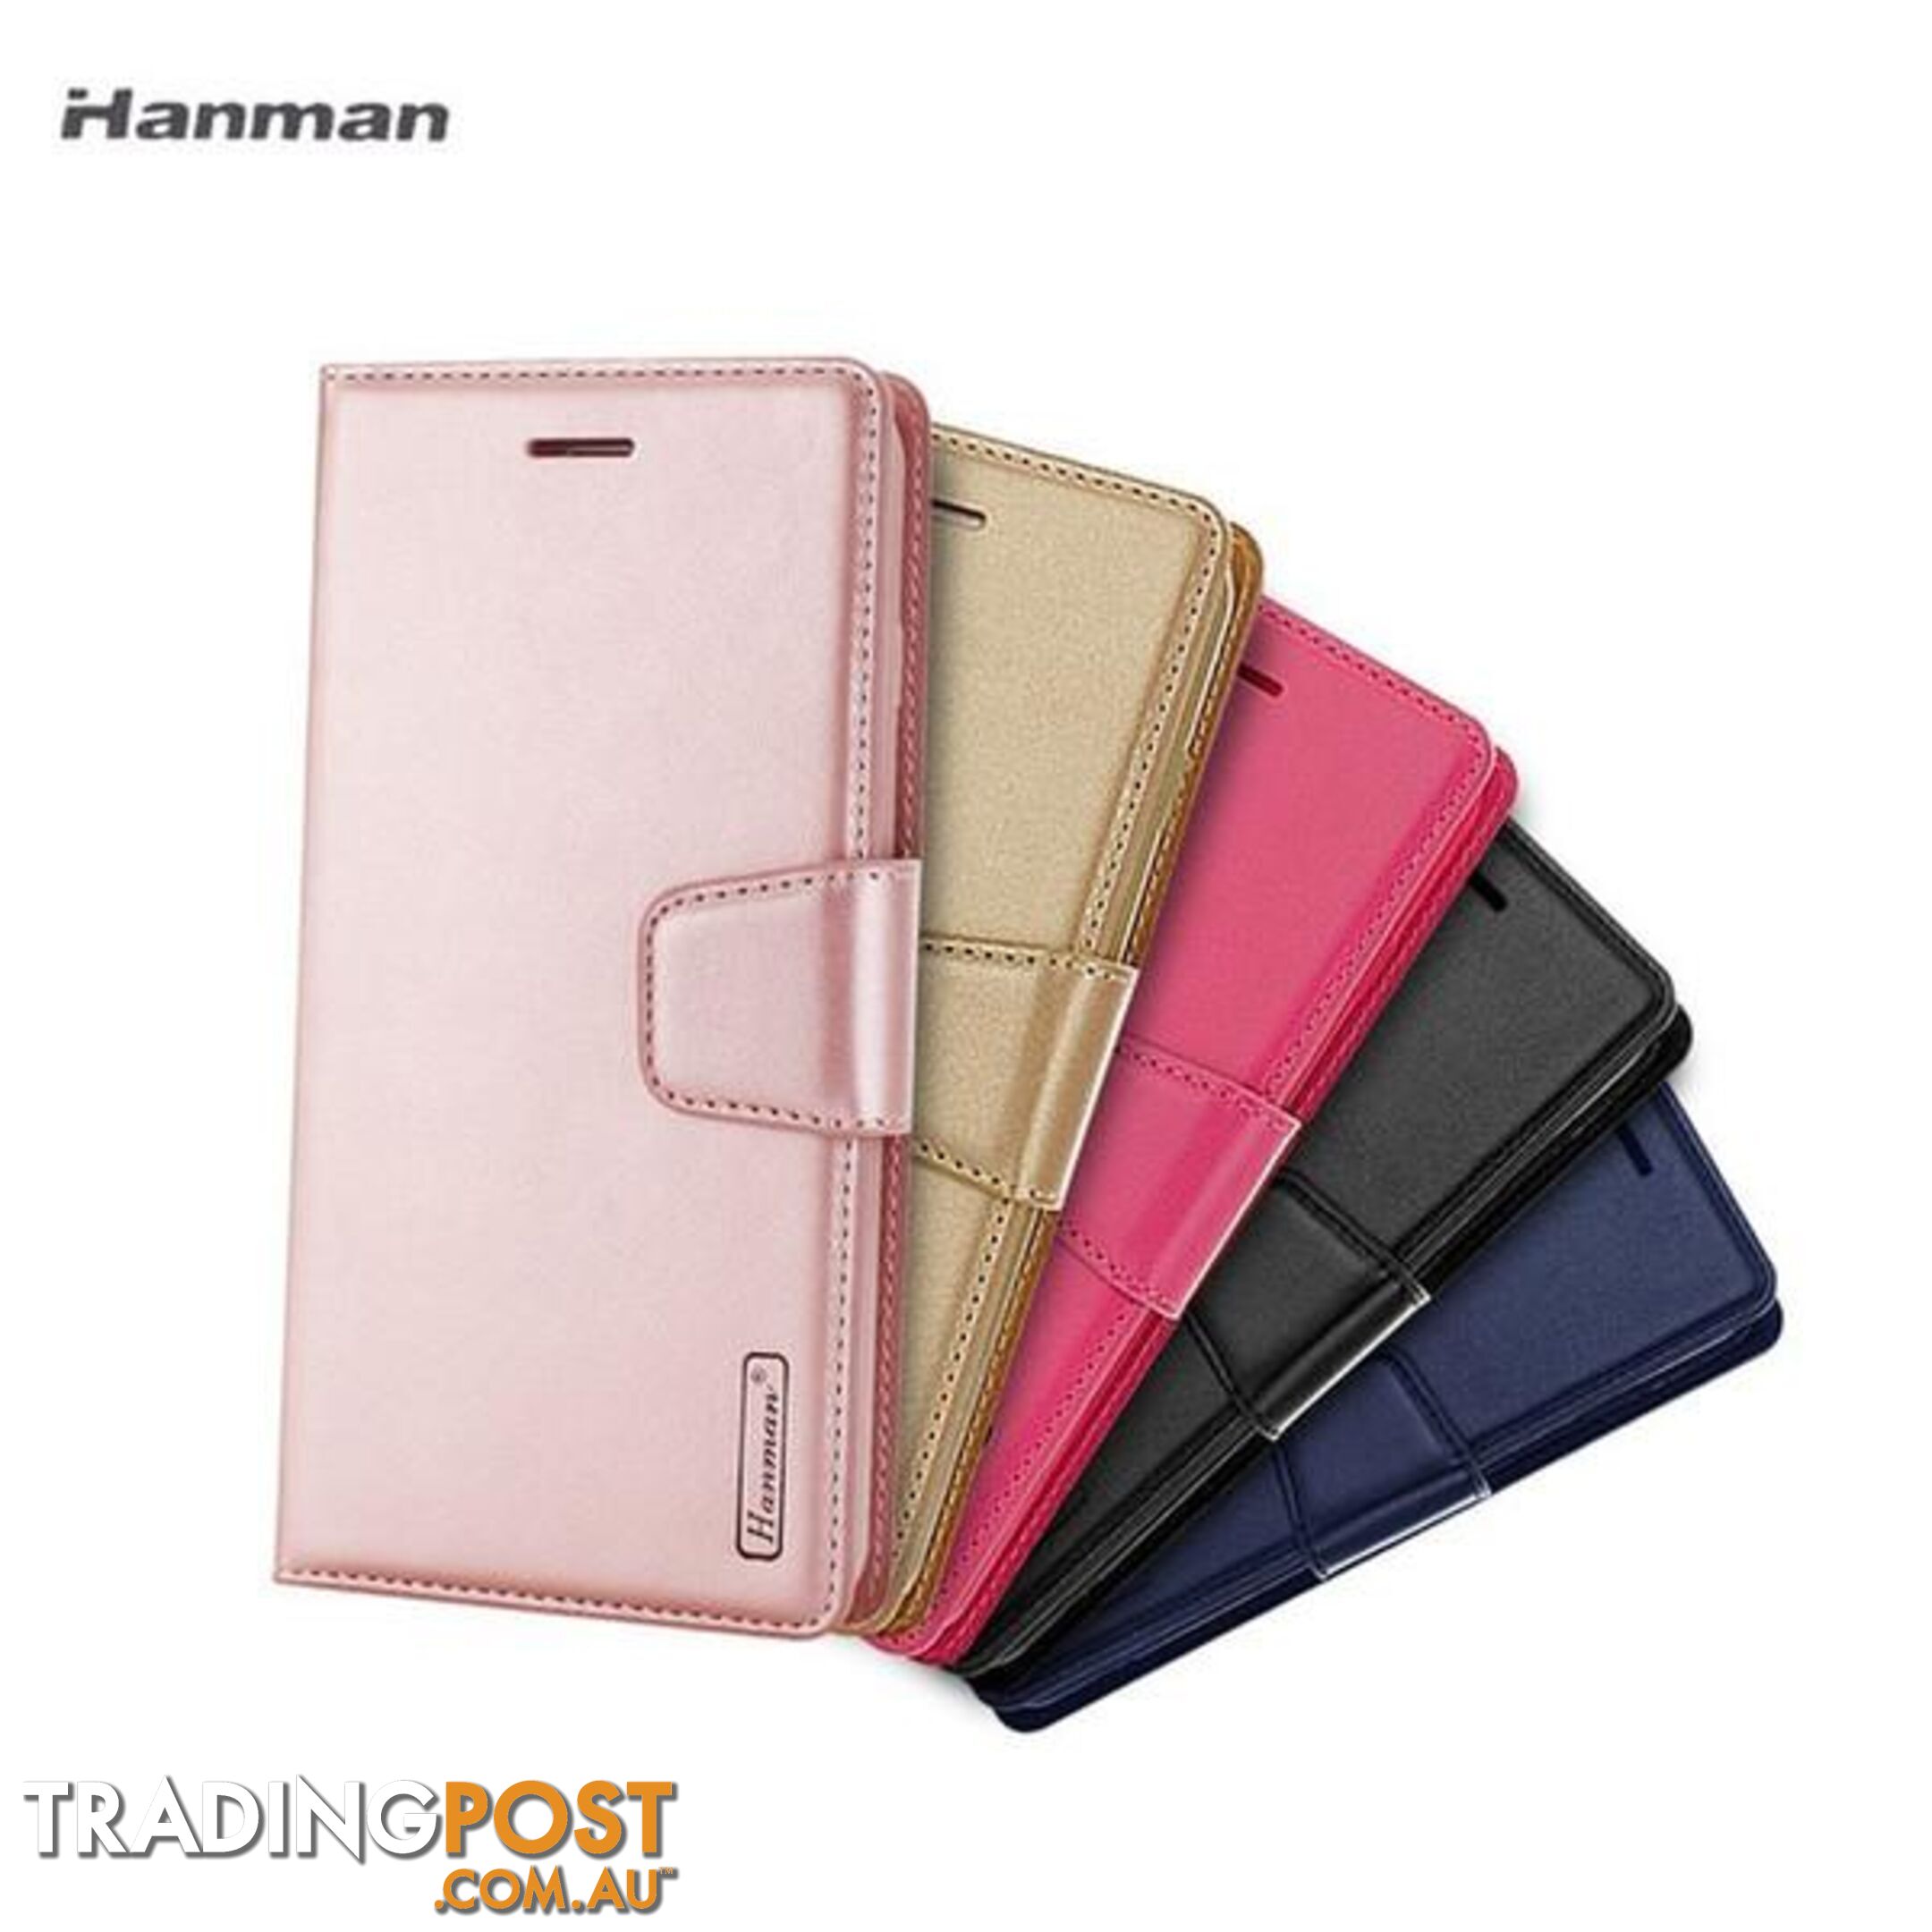 S10 Hanman Wallet Style Case - 100994 - Cases